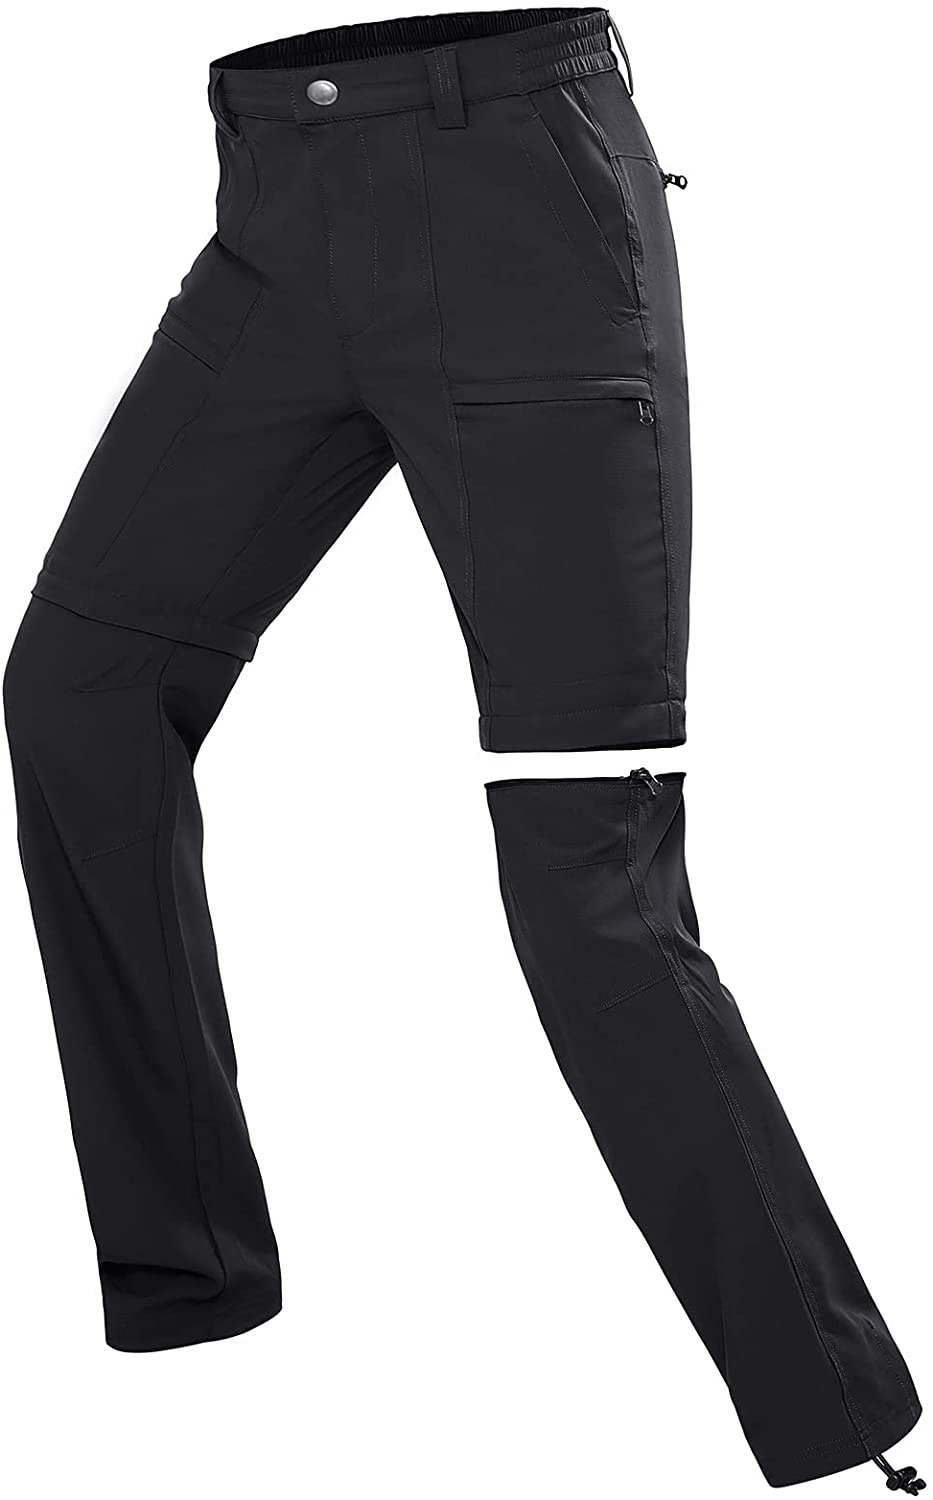 Wespornow Hiking-Pants-Women Convertible Zip-Off Pants Lightweight Quick-Dry Cargo Pants for Golf Kayaking Black / XX-Large